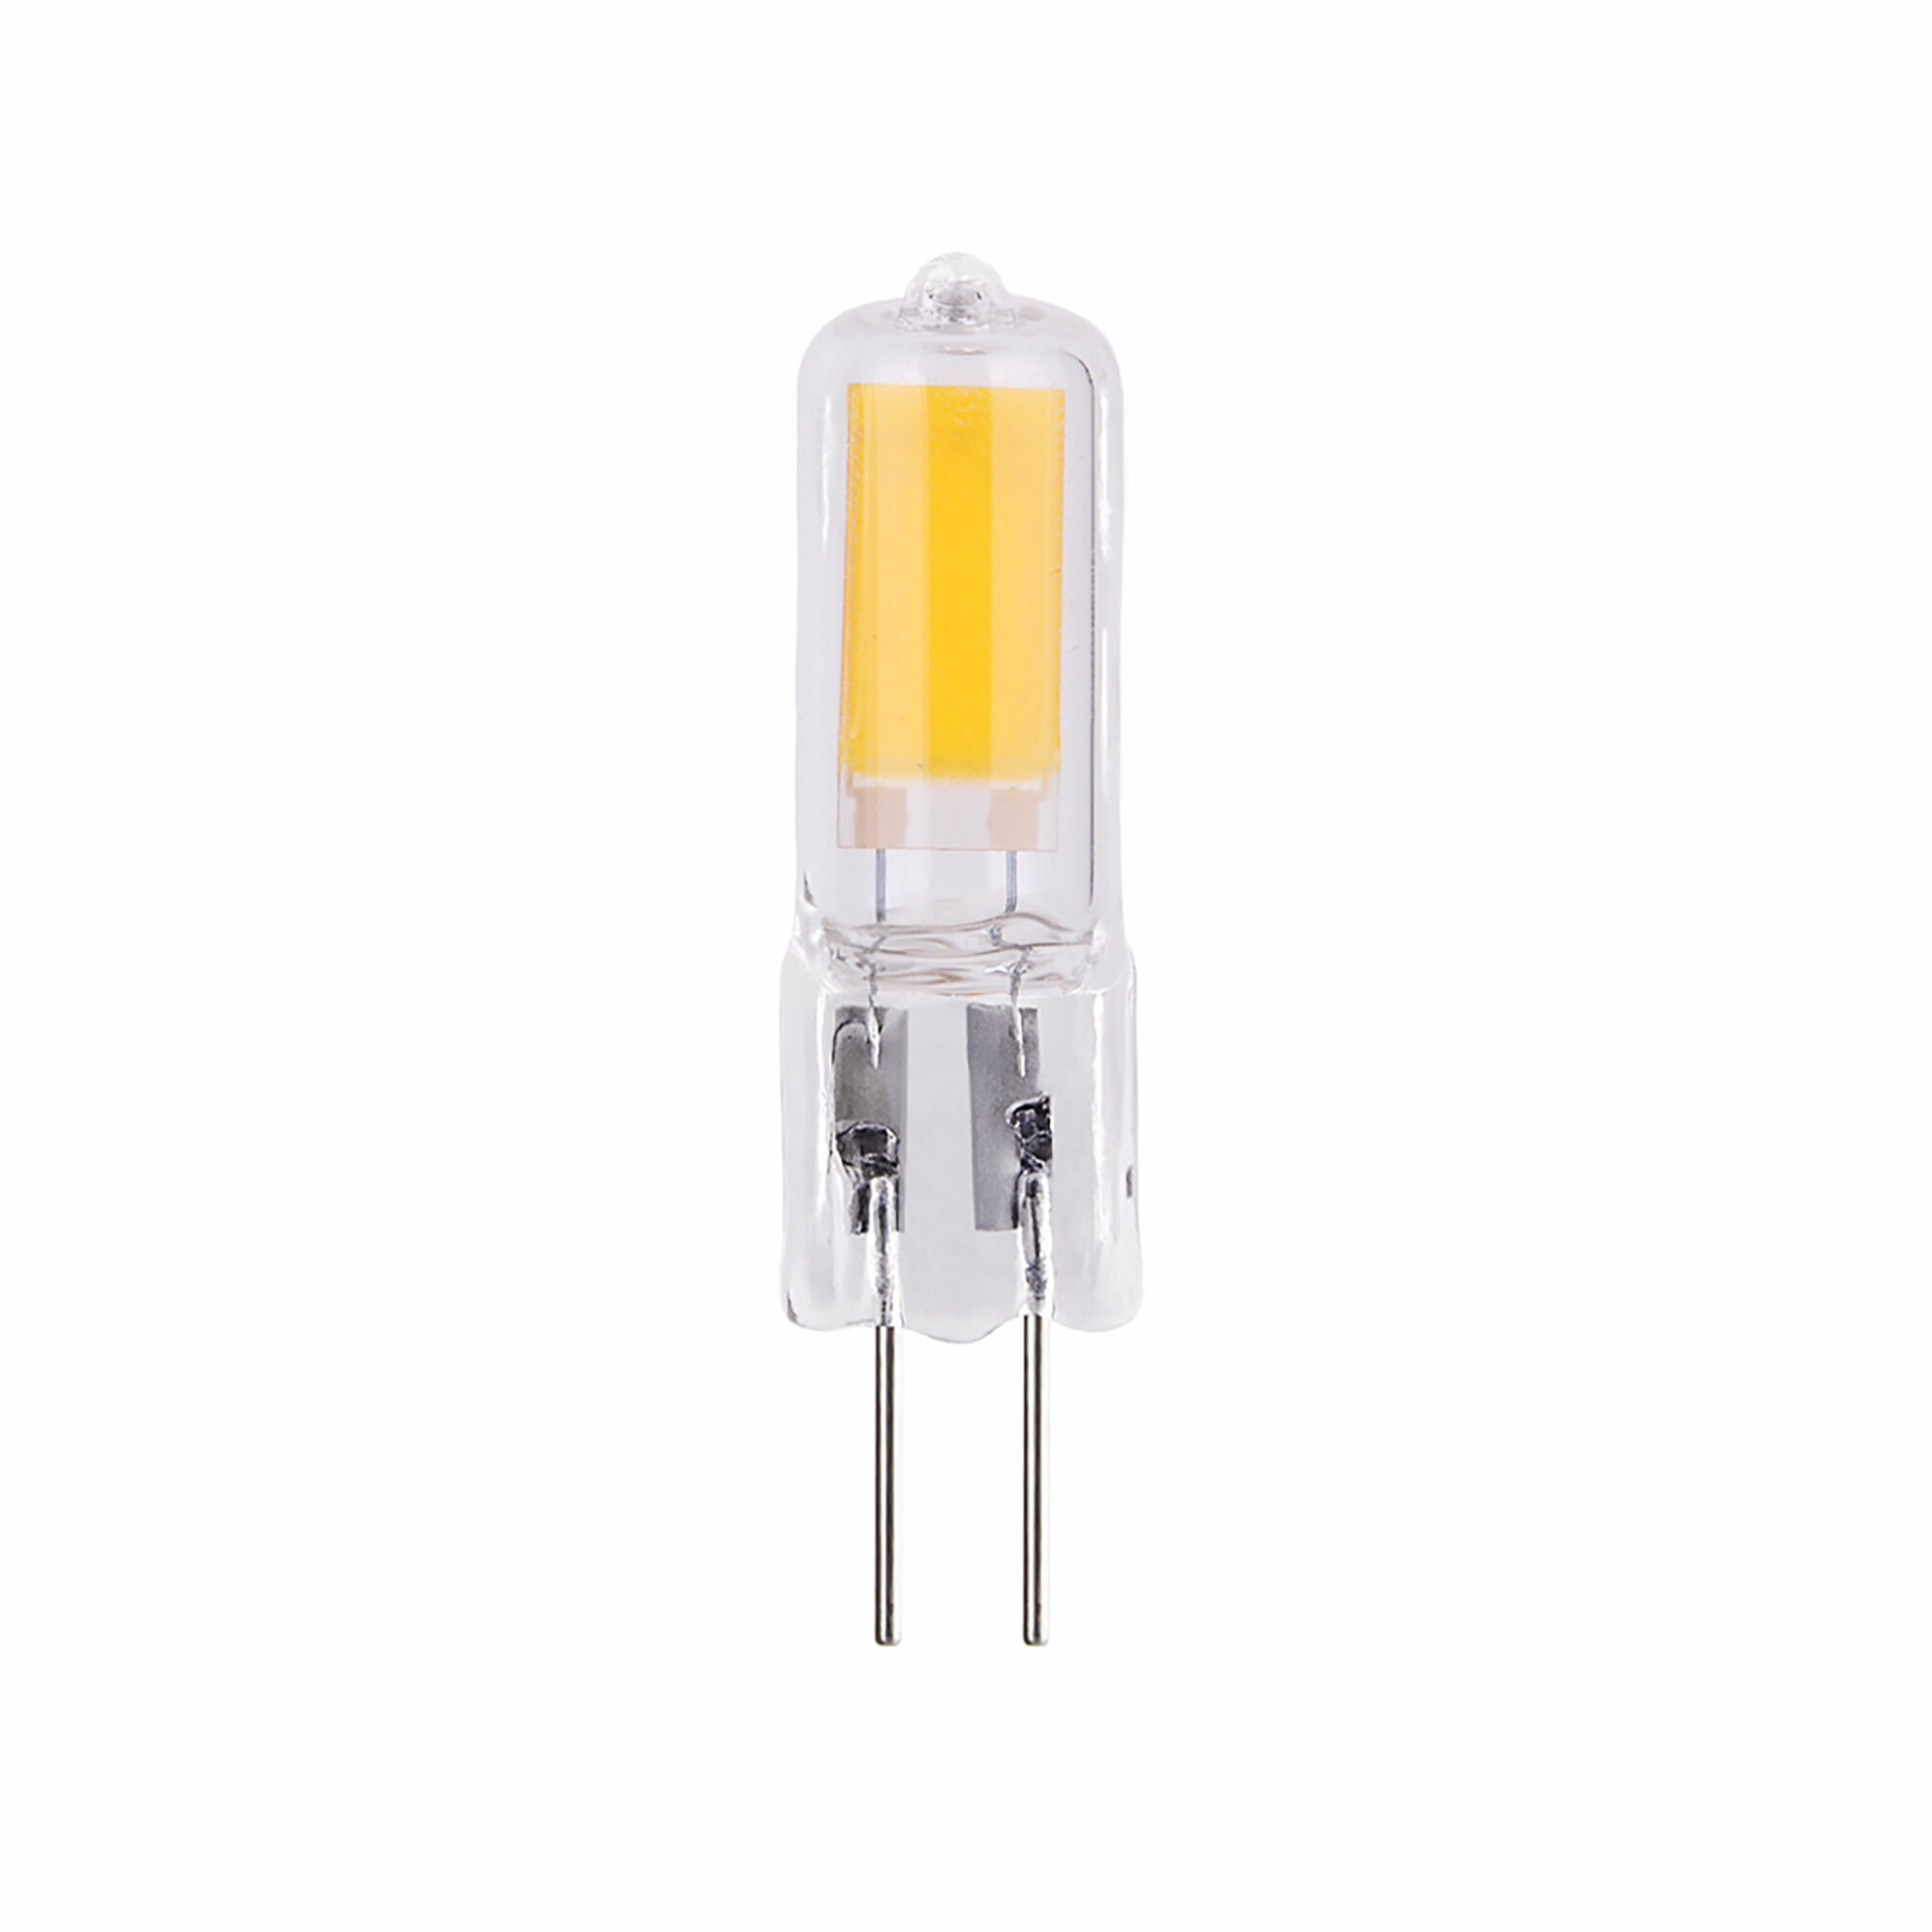 Лампа светодиодная Elektrostandard G4 JCD 5 Вт 3300К теплый свет 220 В капсула (BLG419)